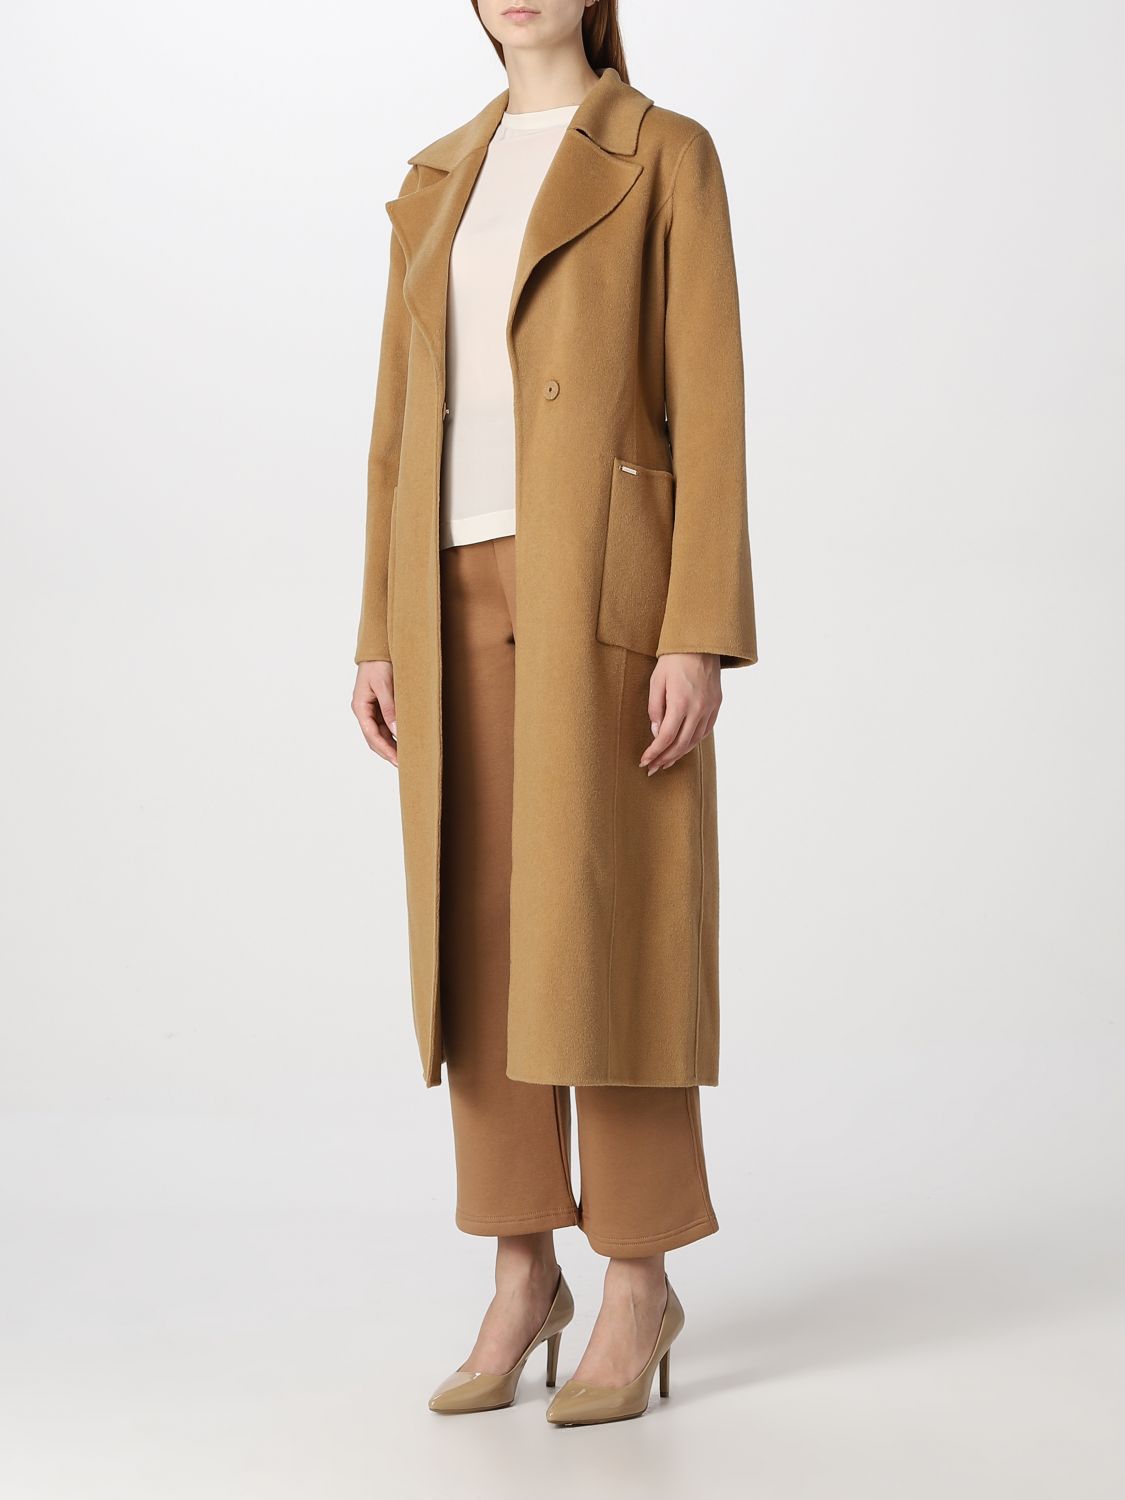 Michael Kors Outlet: coat for woman - Camel | Michael Kors coat 77Q5935M22  online on 